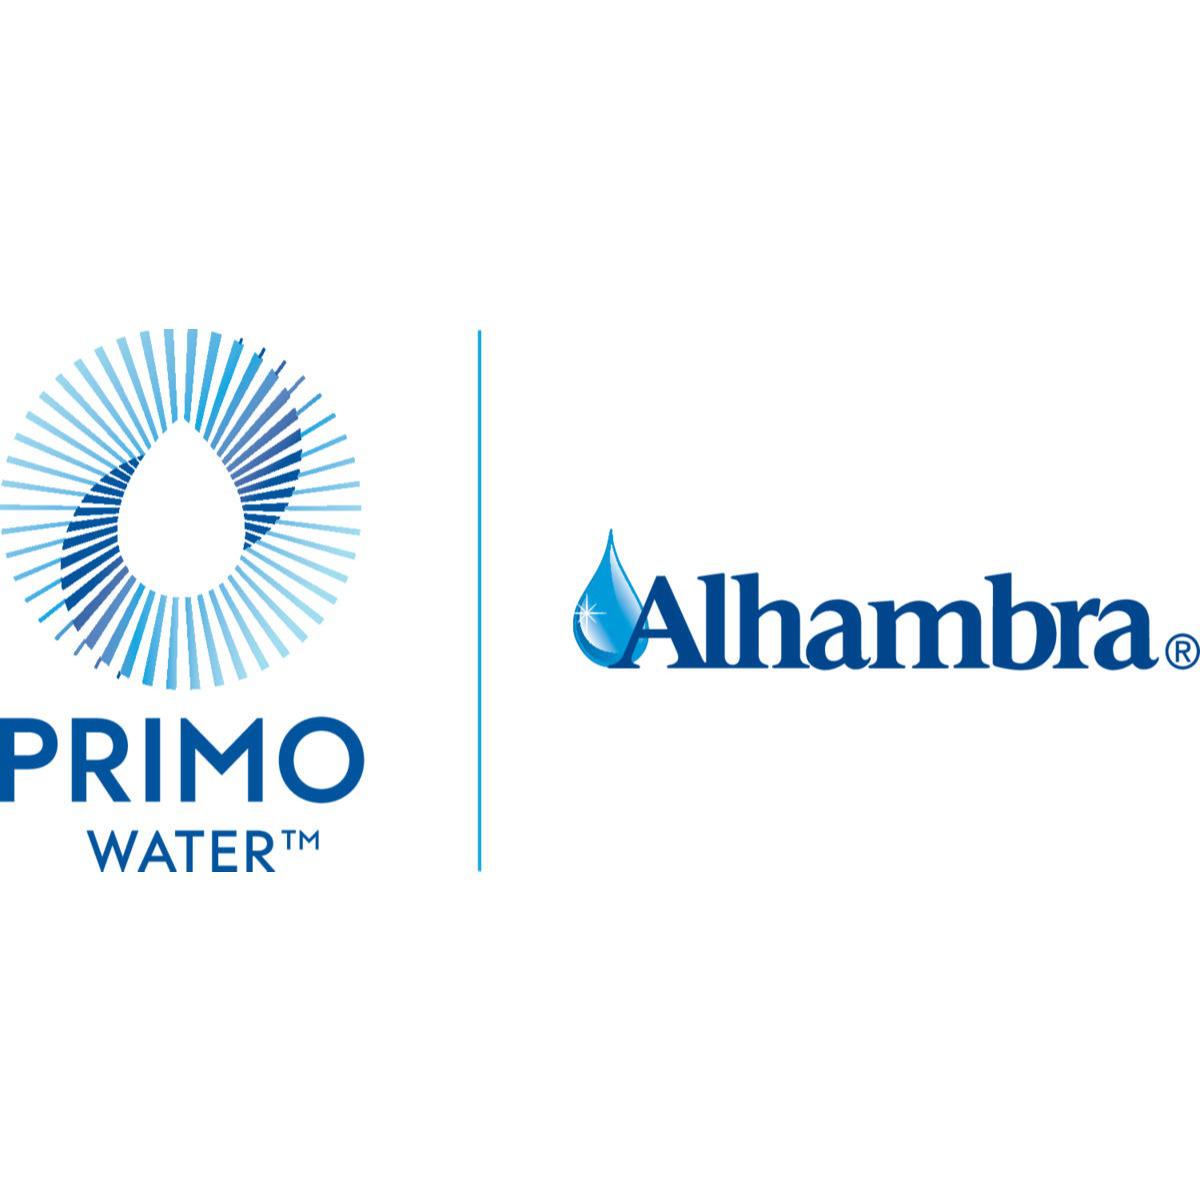 Alhambra Water Delivery Service 4570 - Santa Rosa, CA - (800)492-8377 | ShowMeLocal.com